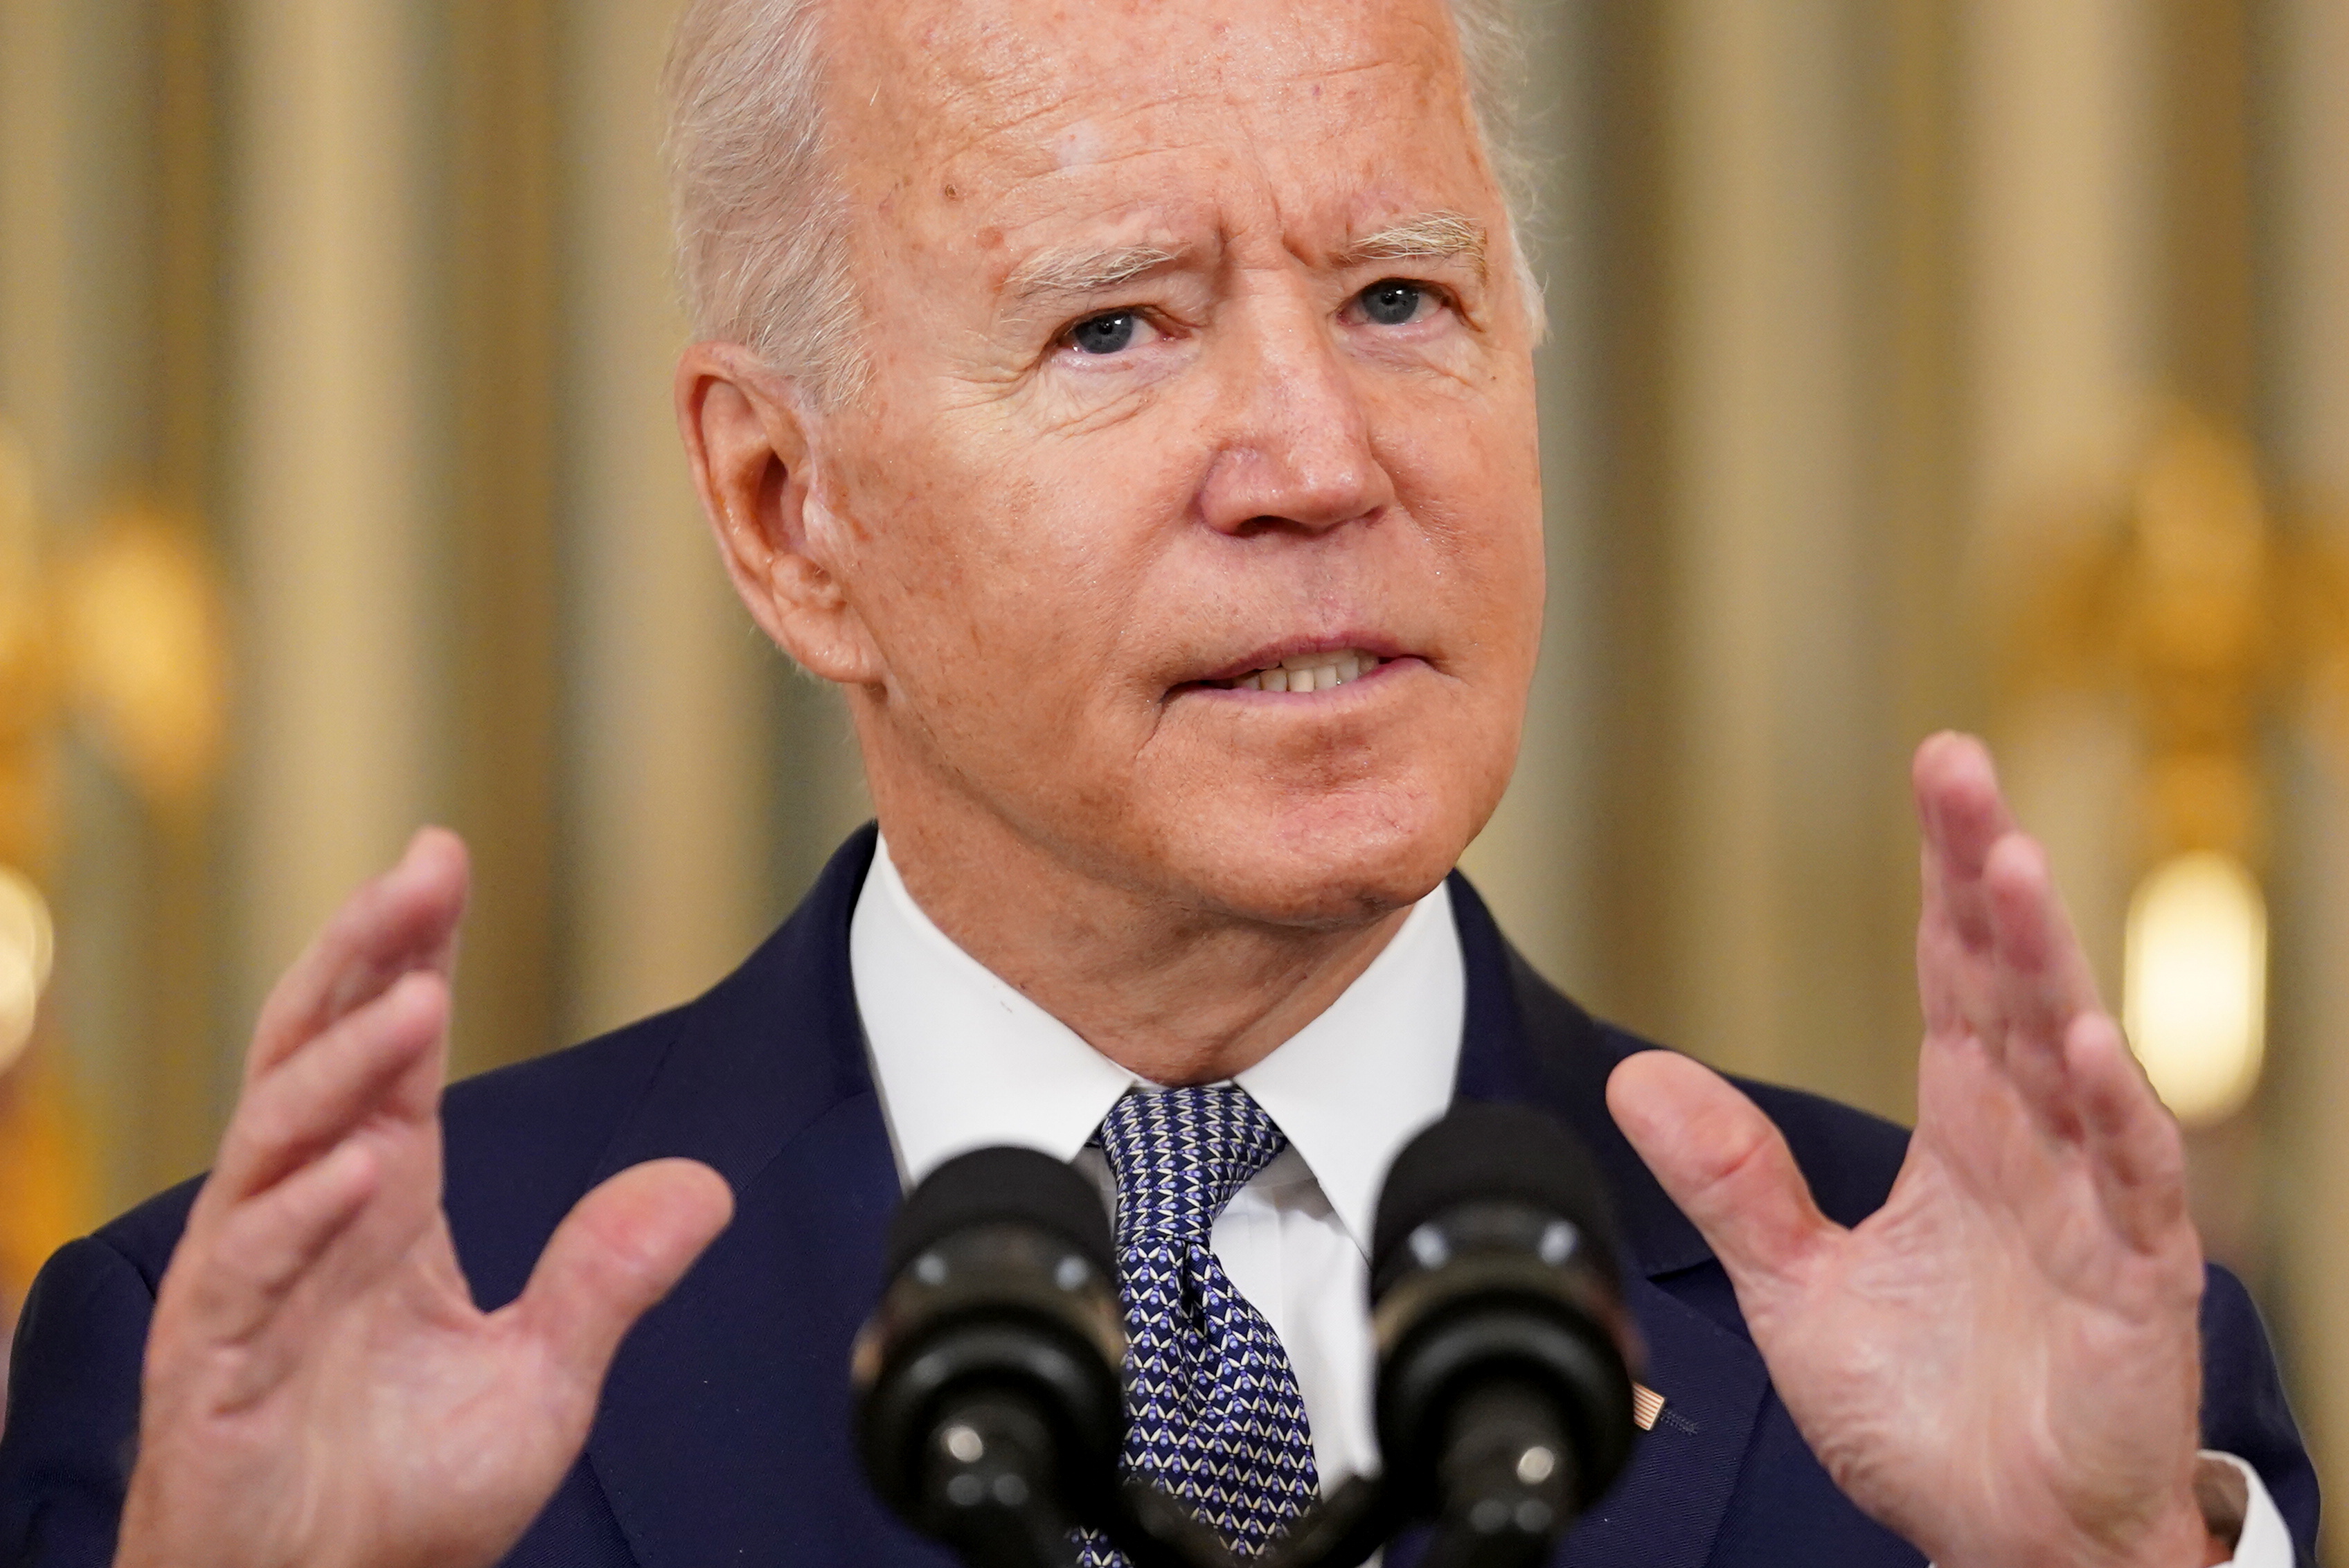 U.S. President Biden delivers remarks on August Jobs Report in Washington